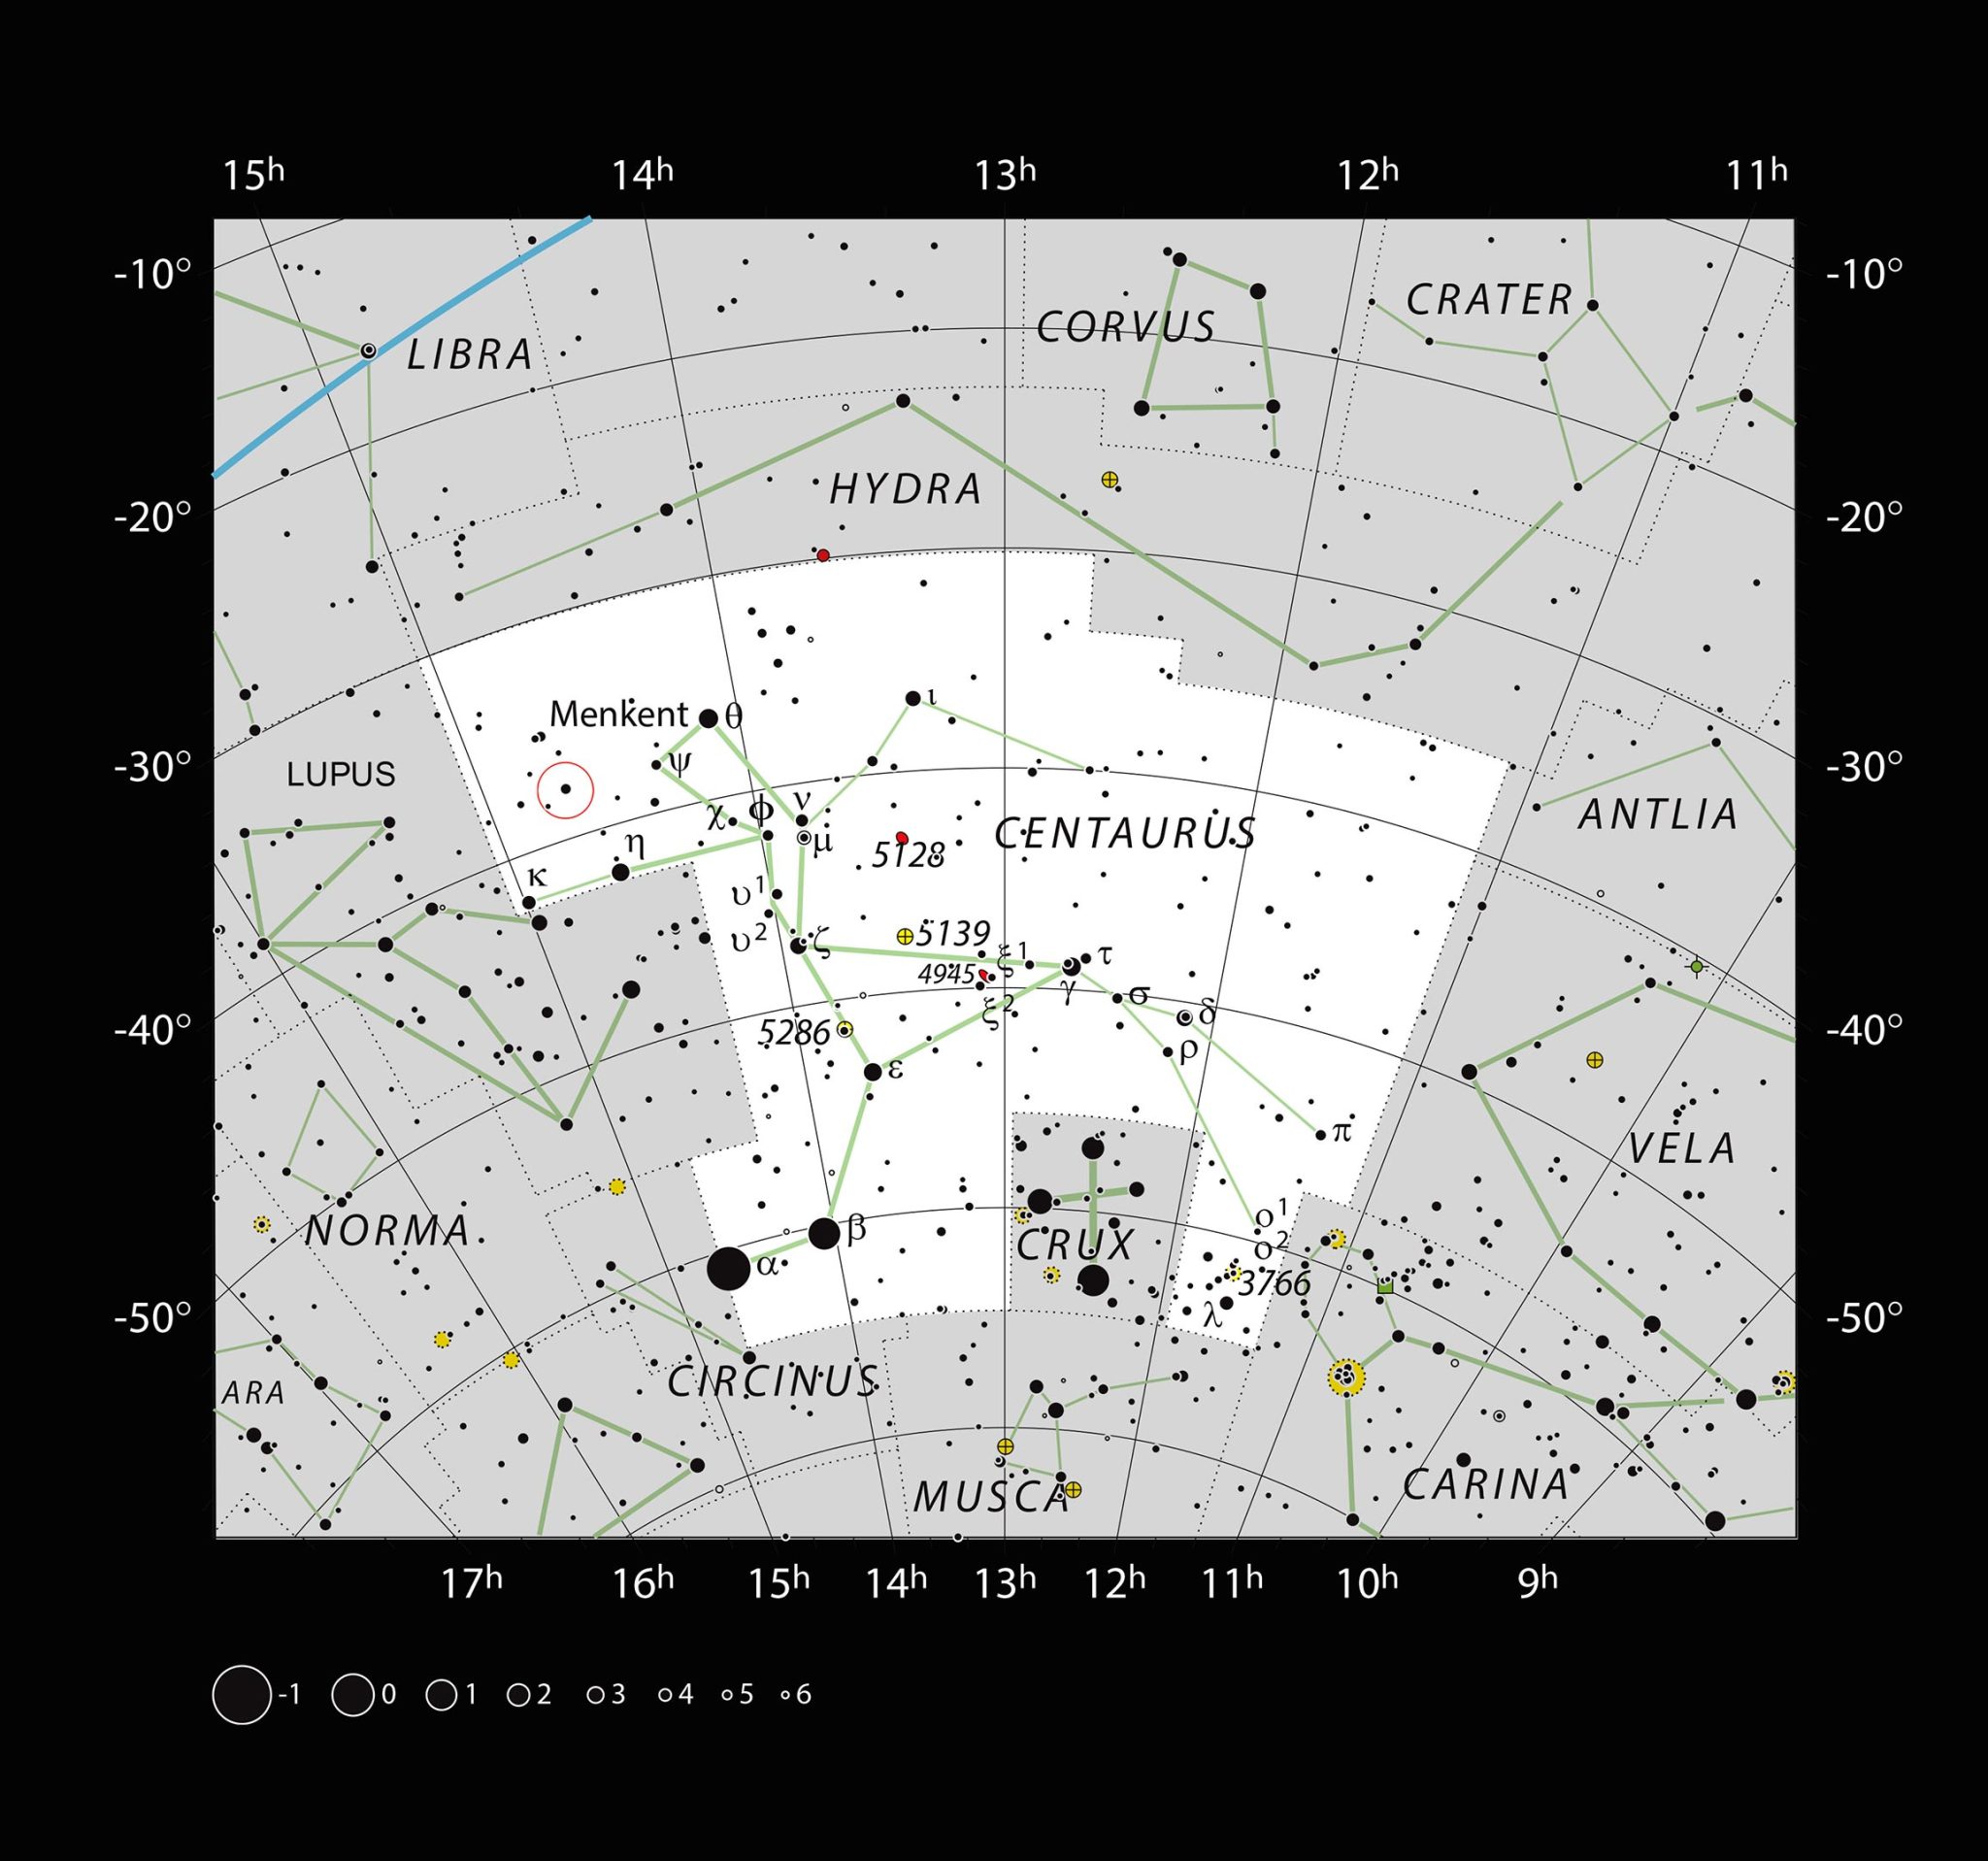 Проксима Центавра на карте звездного неба